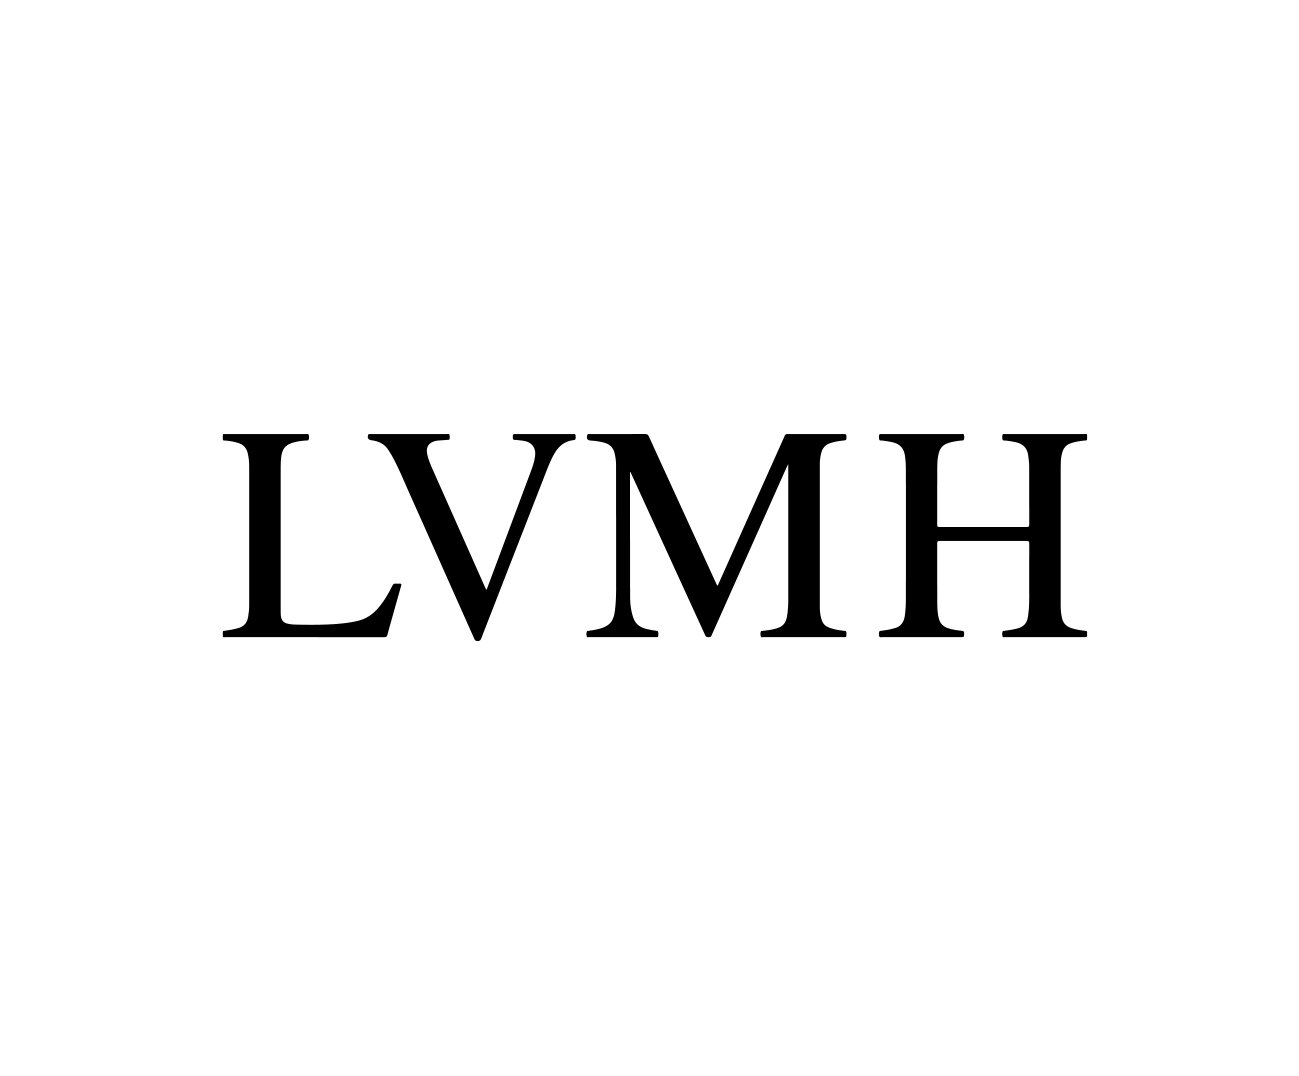 Louis Vuitton Moët Hennessy Logo Ekkiden